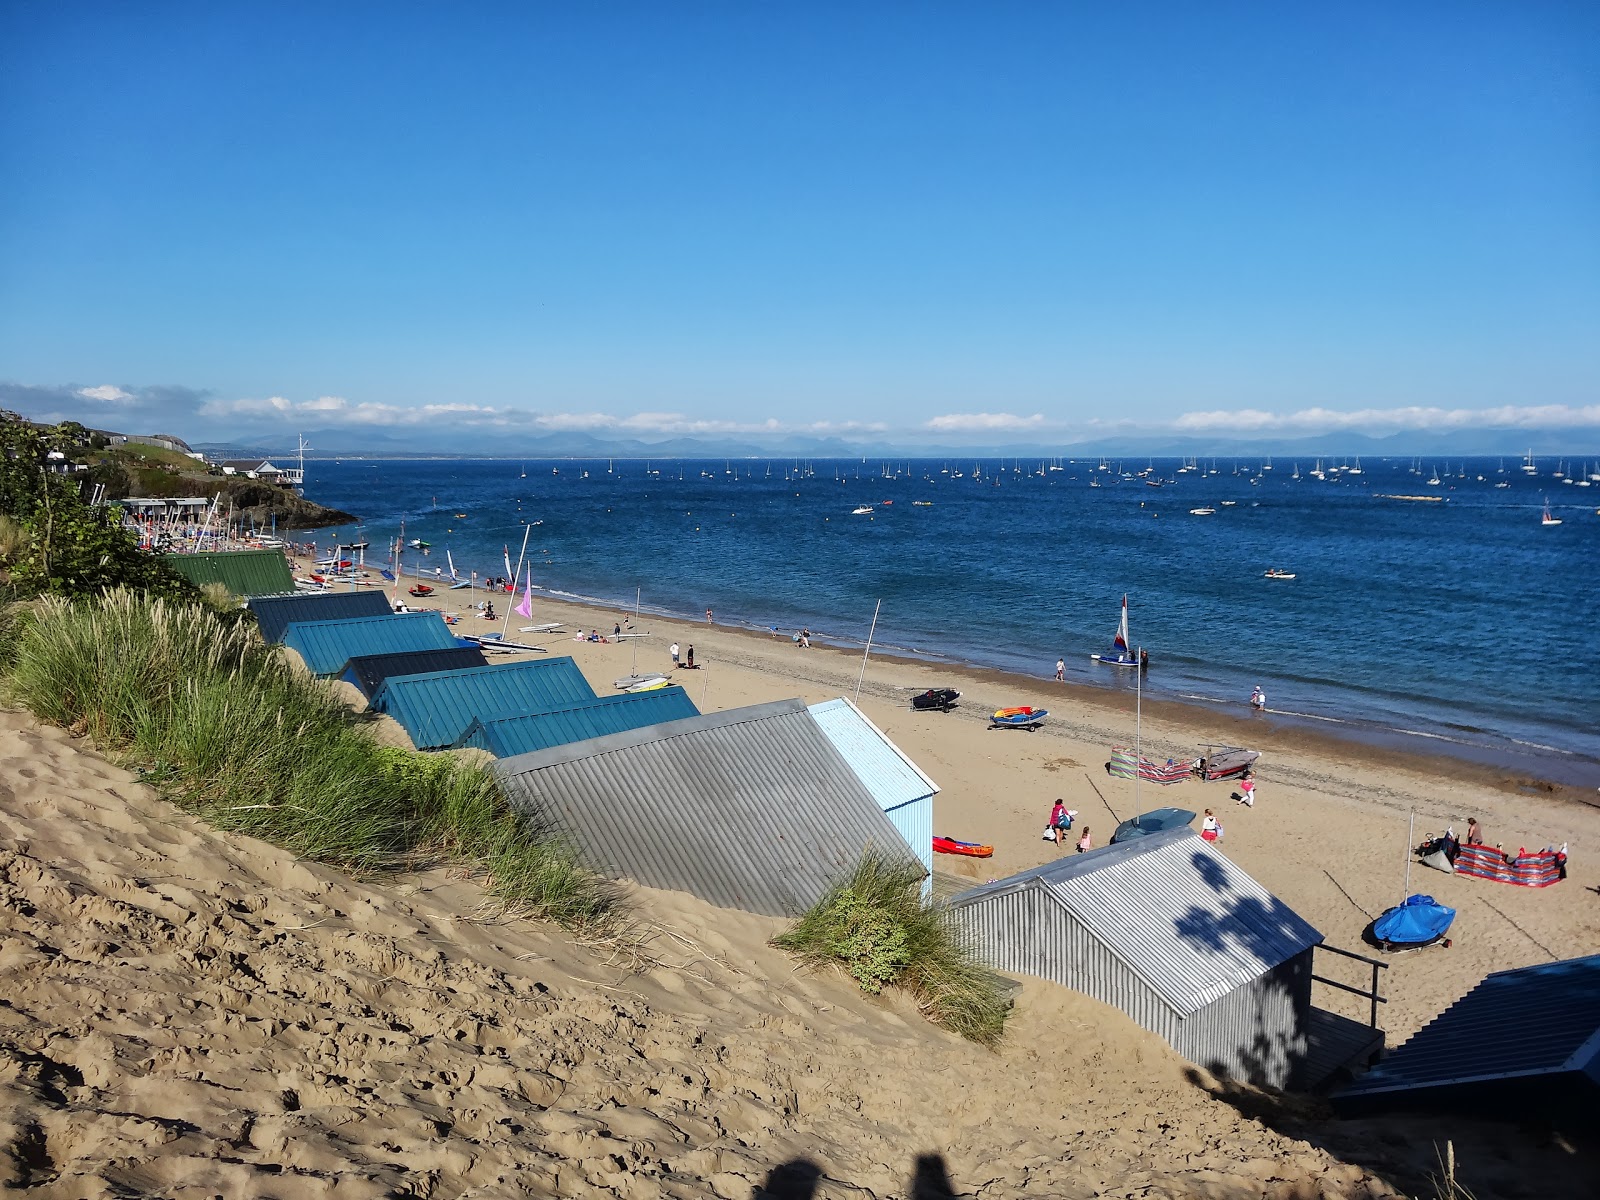 Foto de Abersoch beach - lugar popular entre os apreciadores de relaxamento